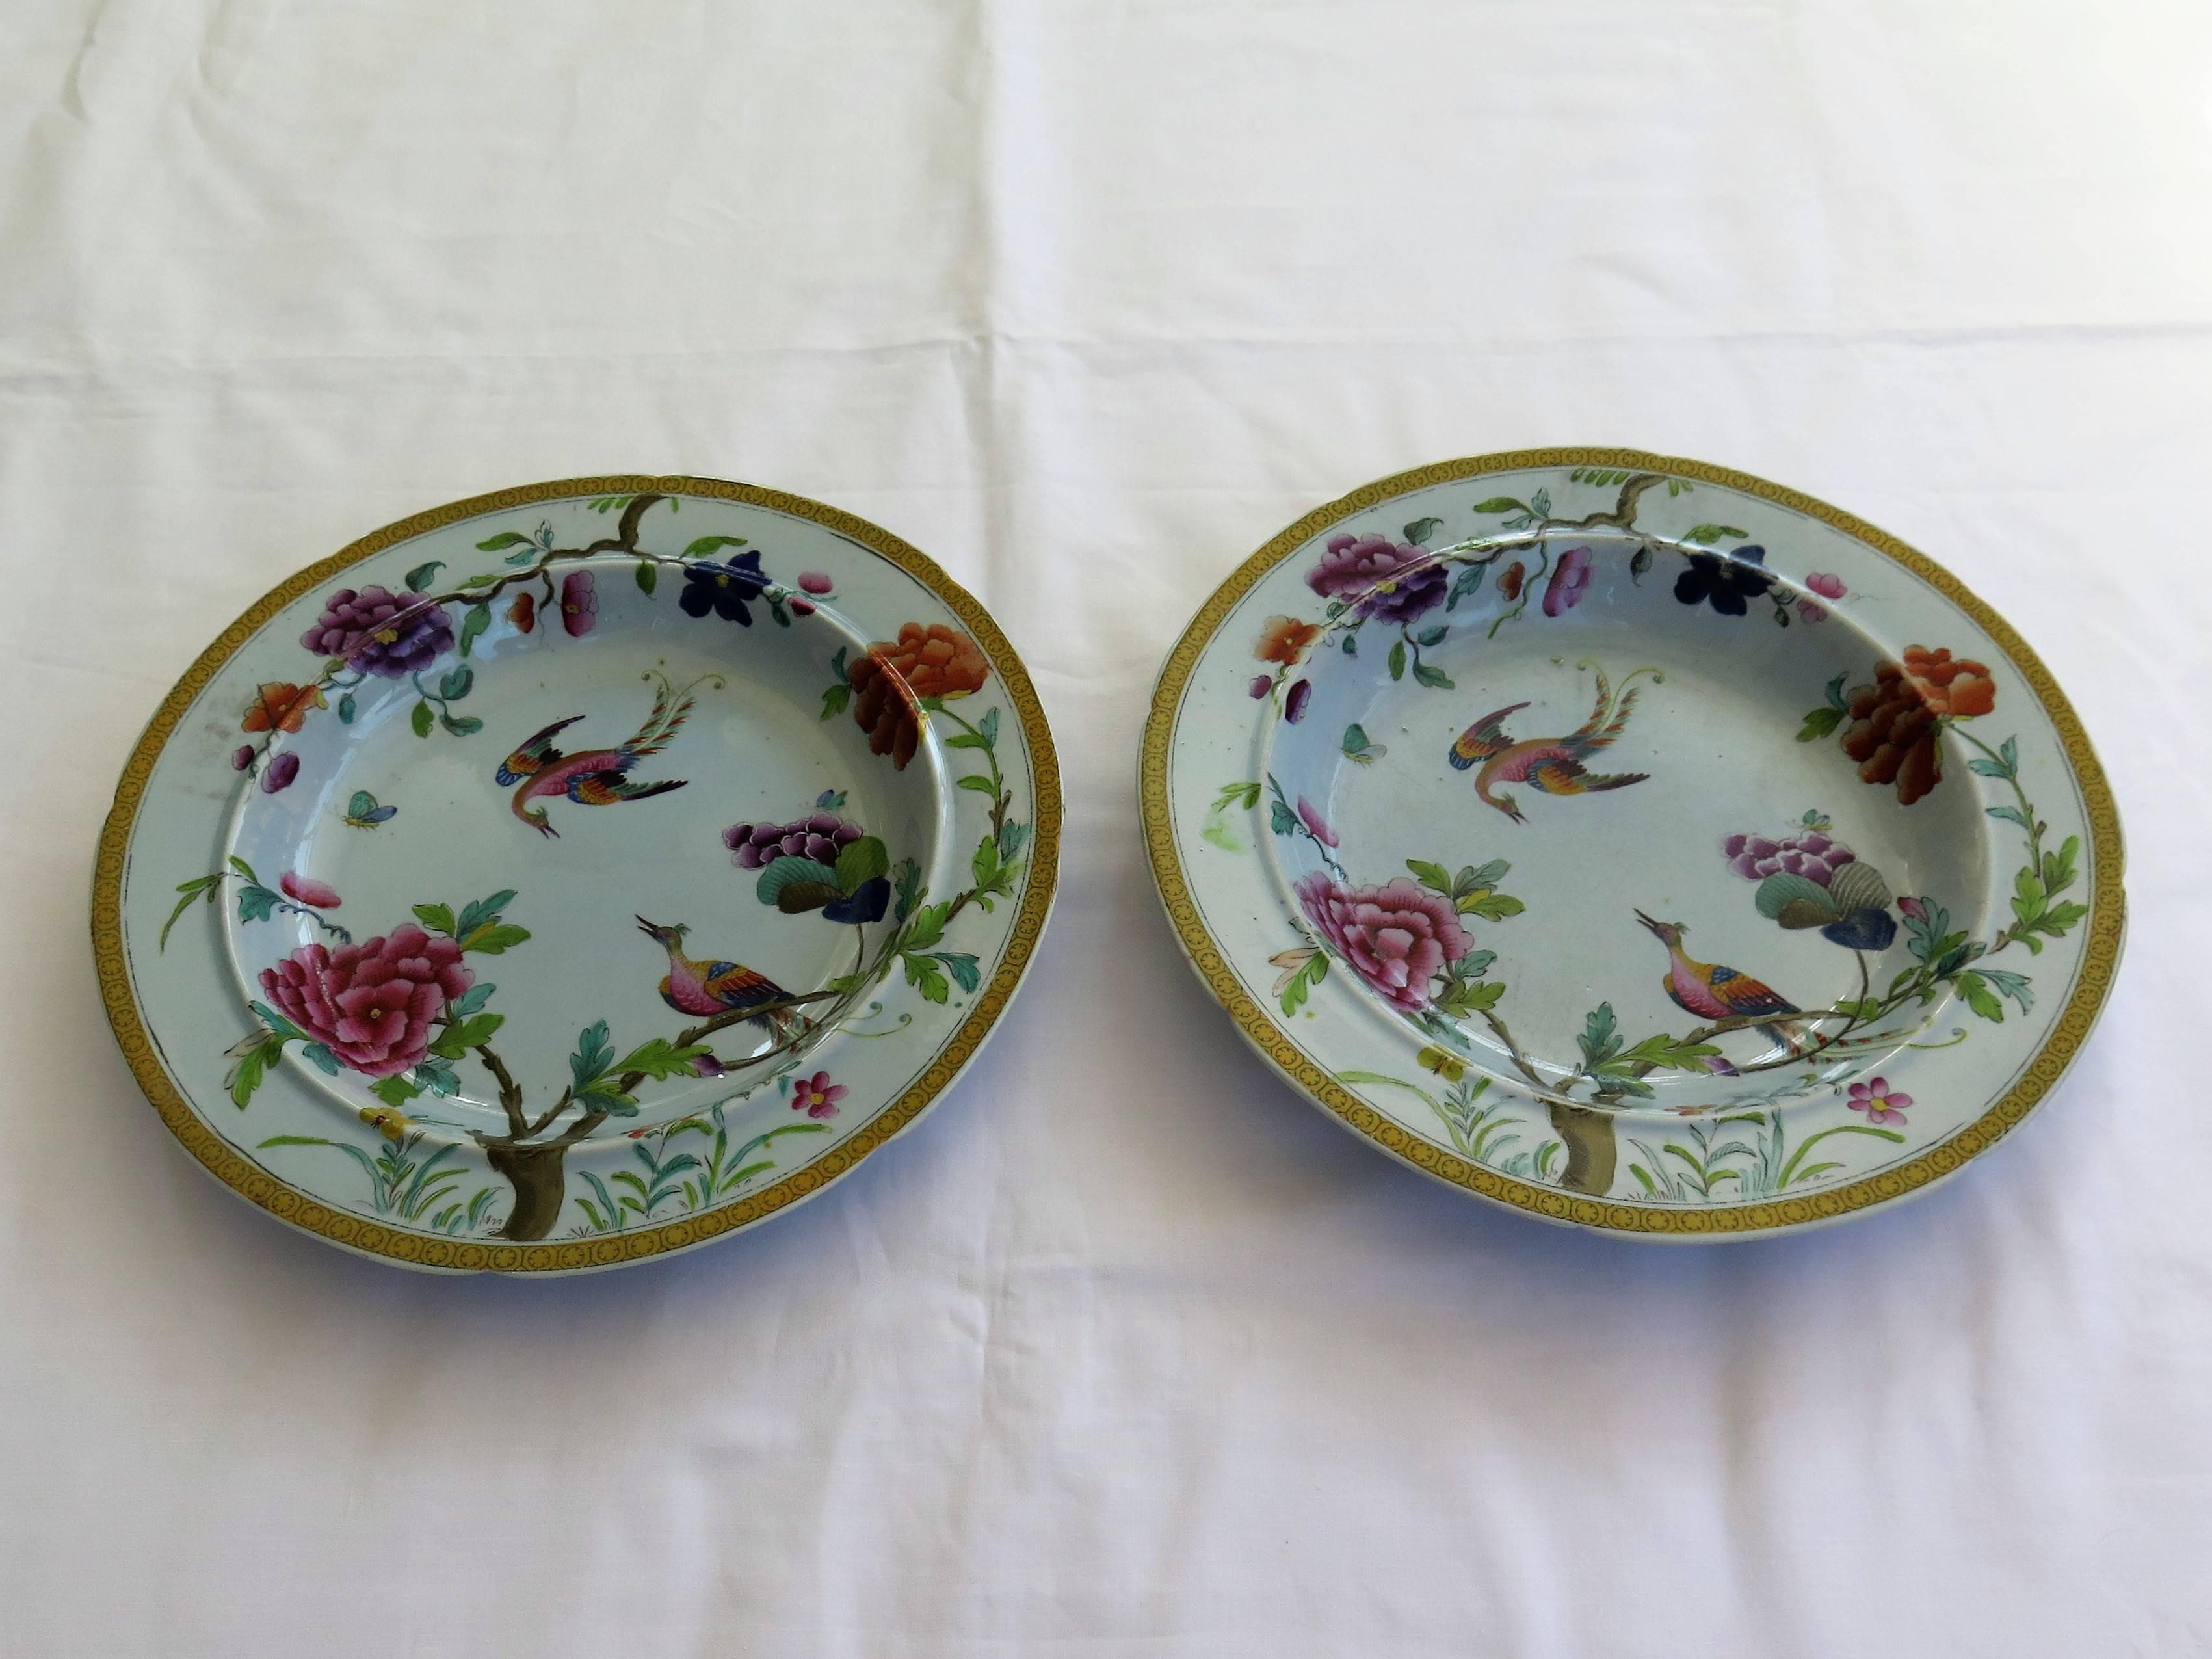 Rare Pair of Stephen Folch Ironstone Soup Plates Oriental Pheasants, circa 1825 (Chinoiserie)